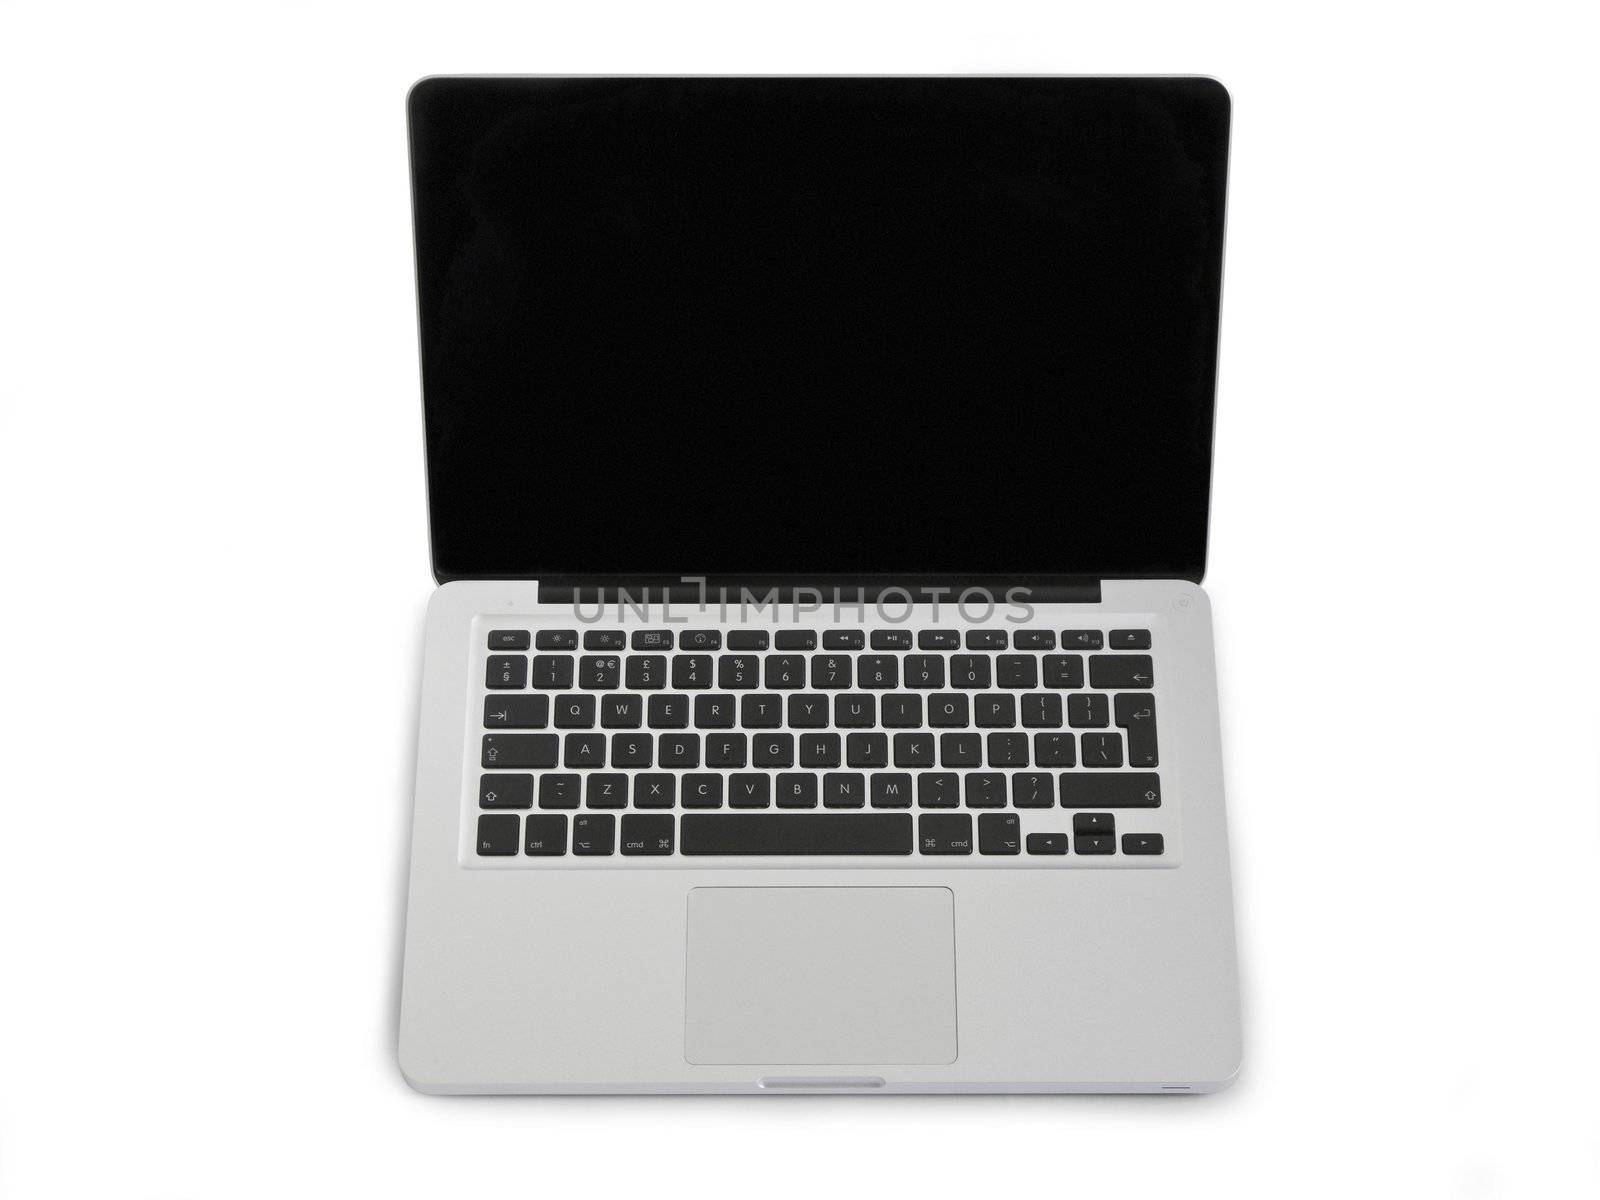 2008 Apple MacBook on white background